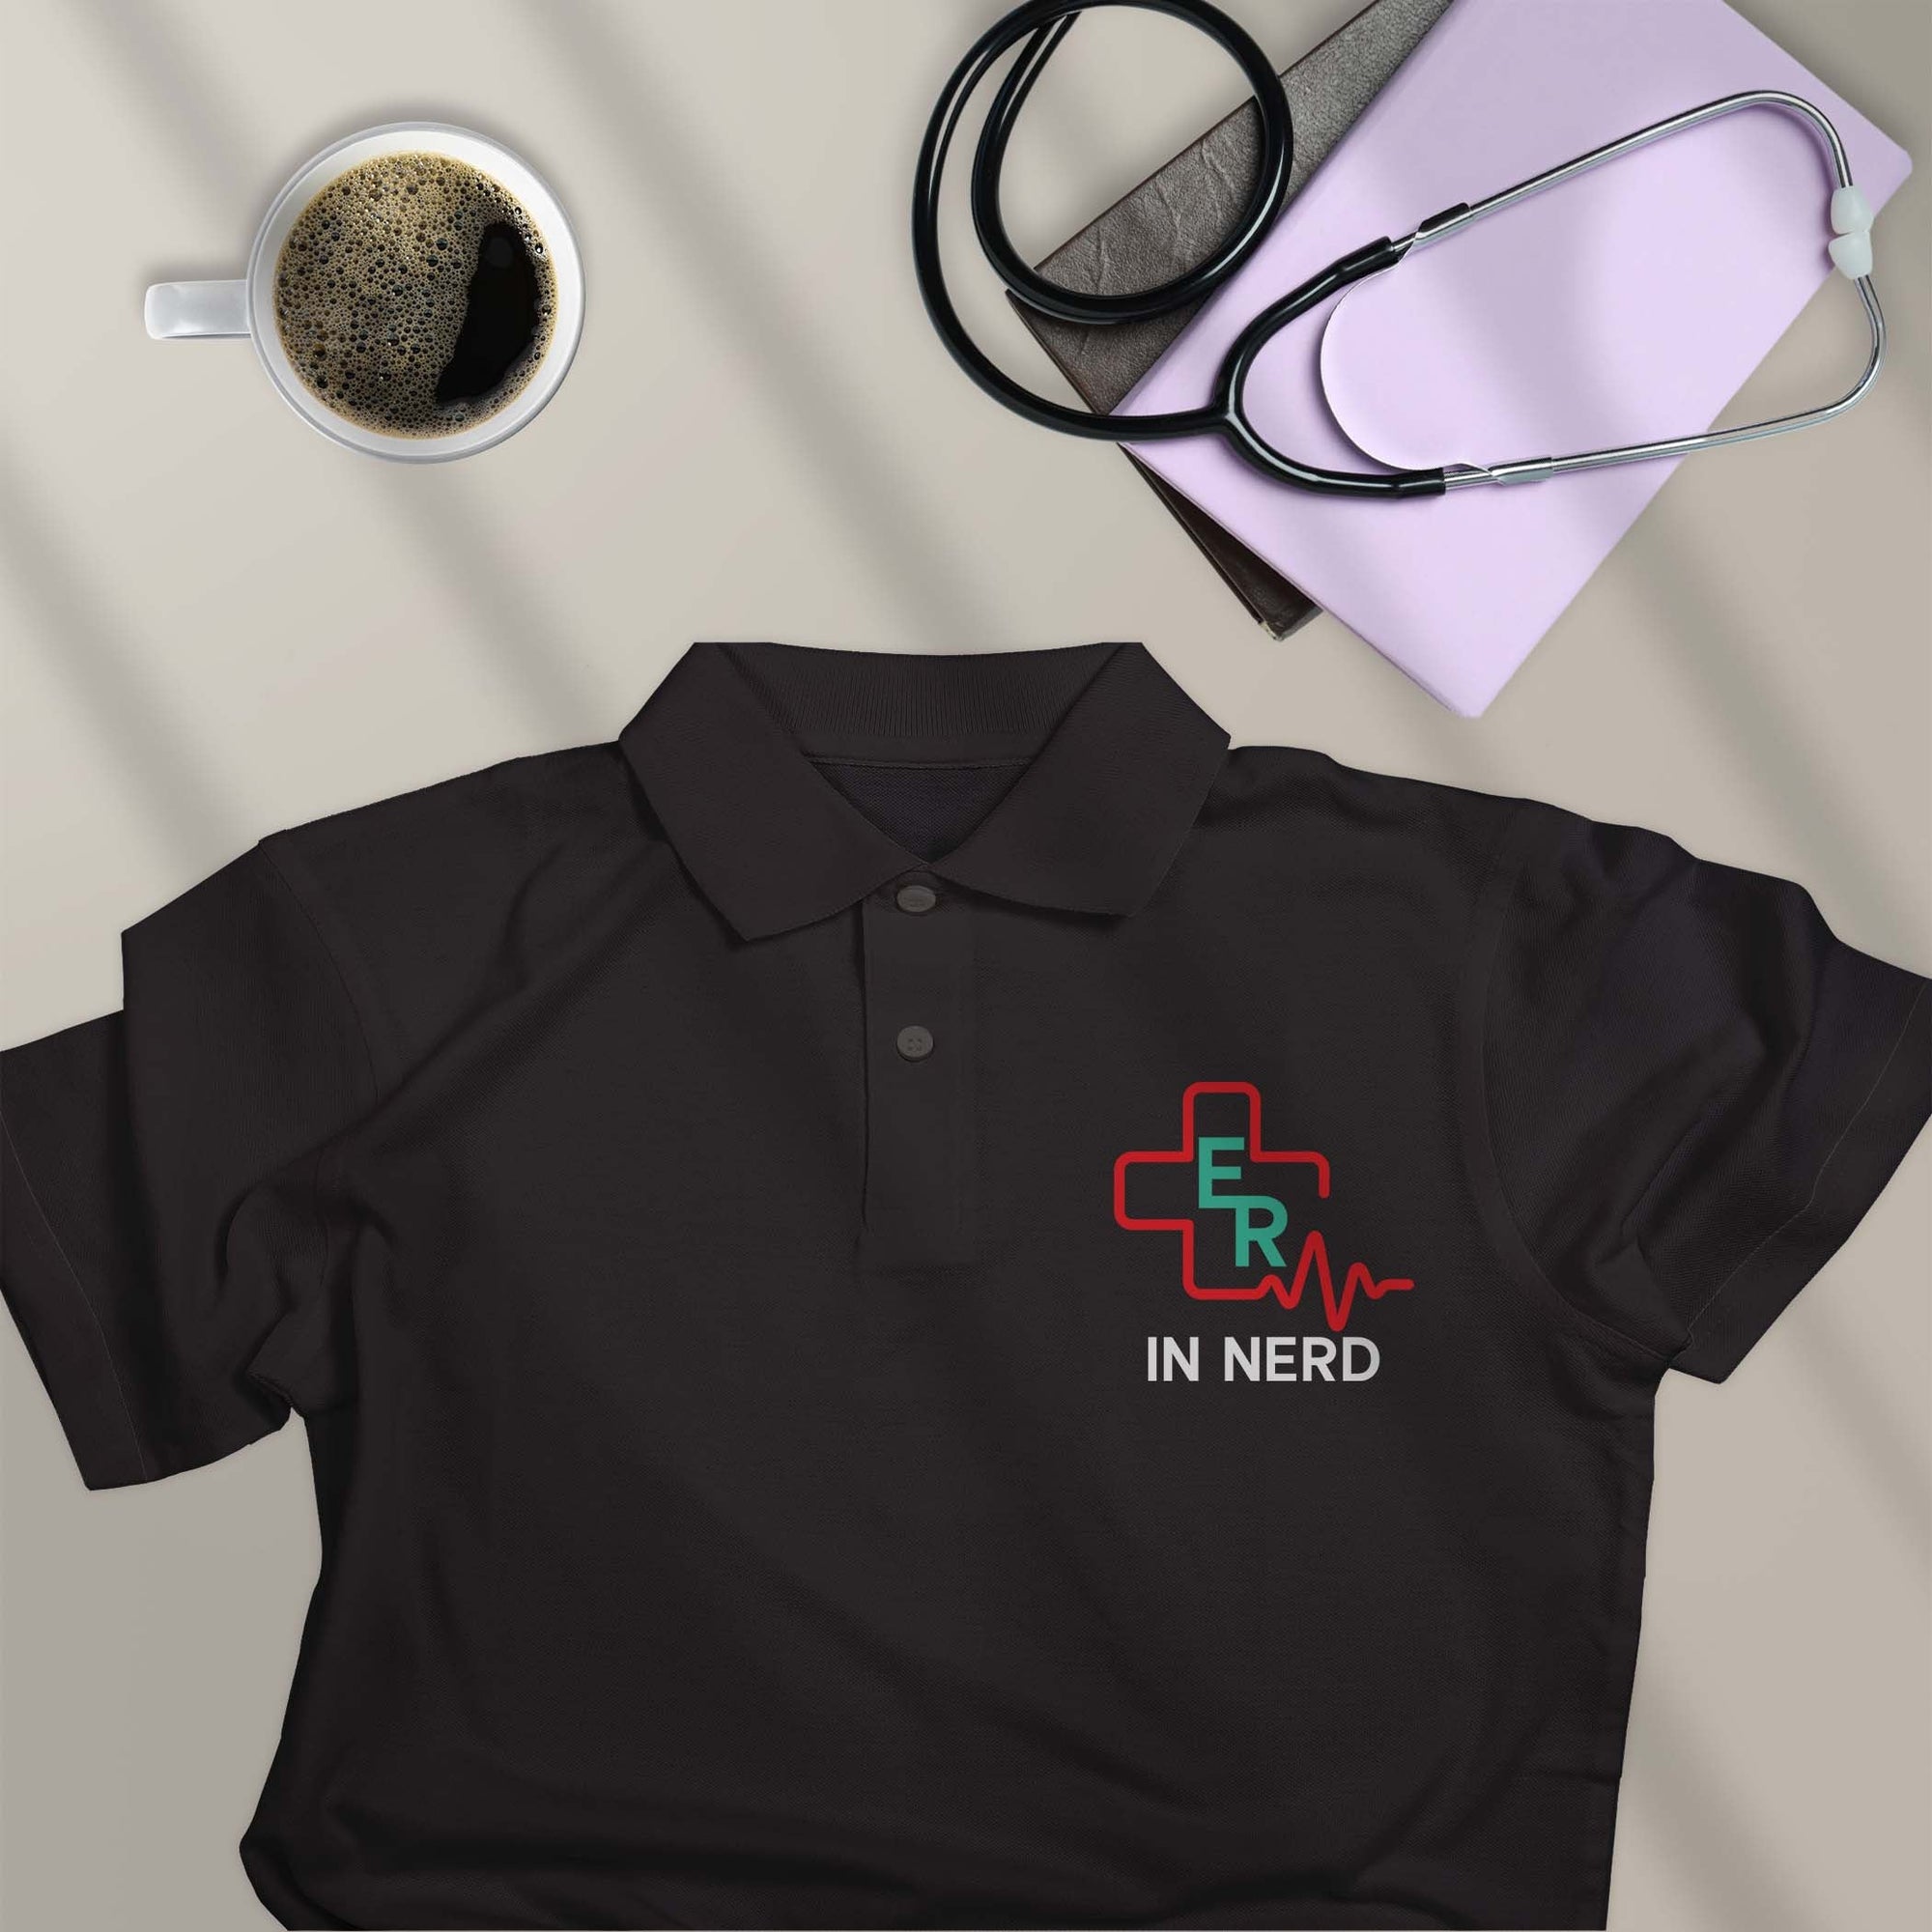 ER In Nerd - Polo T-shirt For Emergency Medicine Doctor